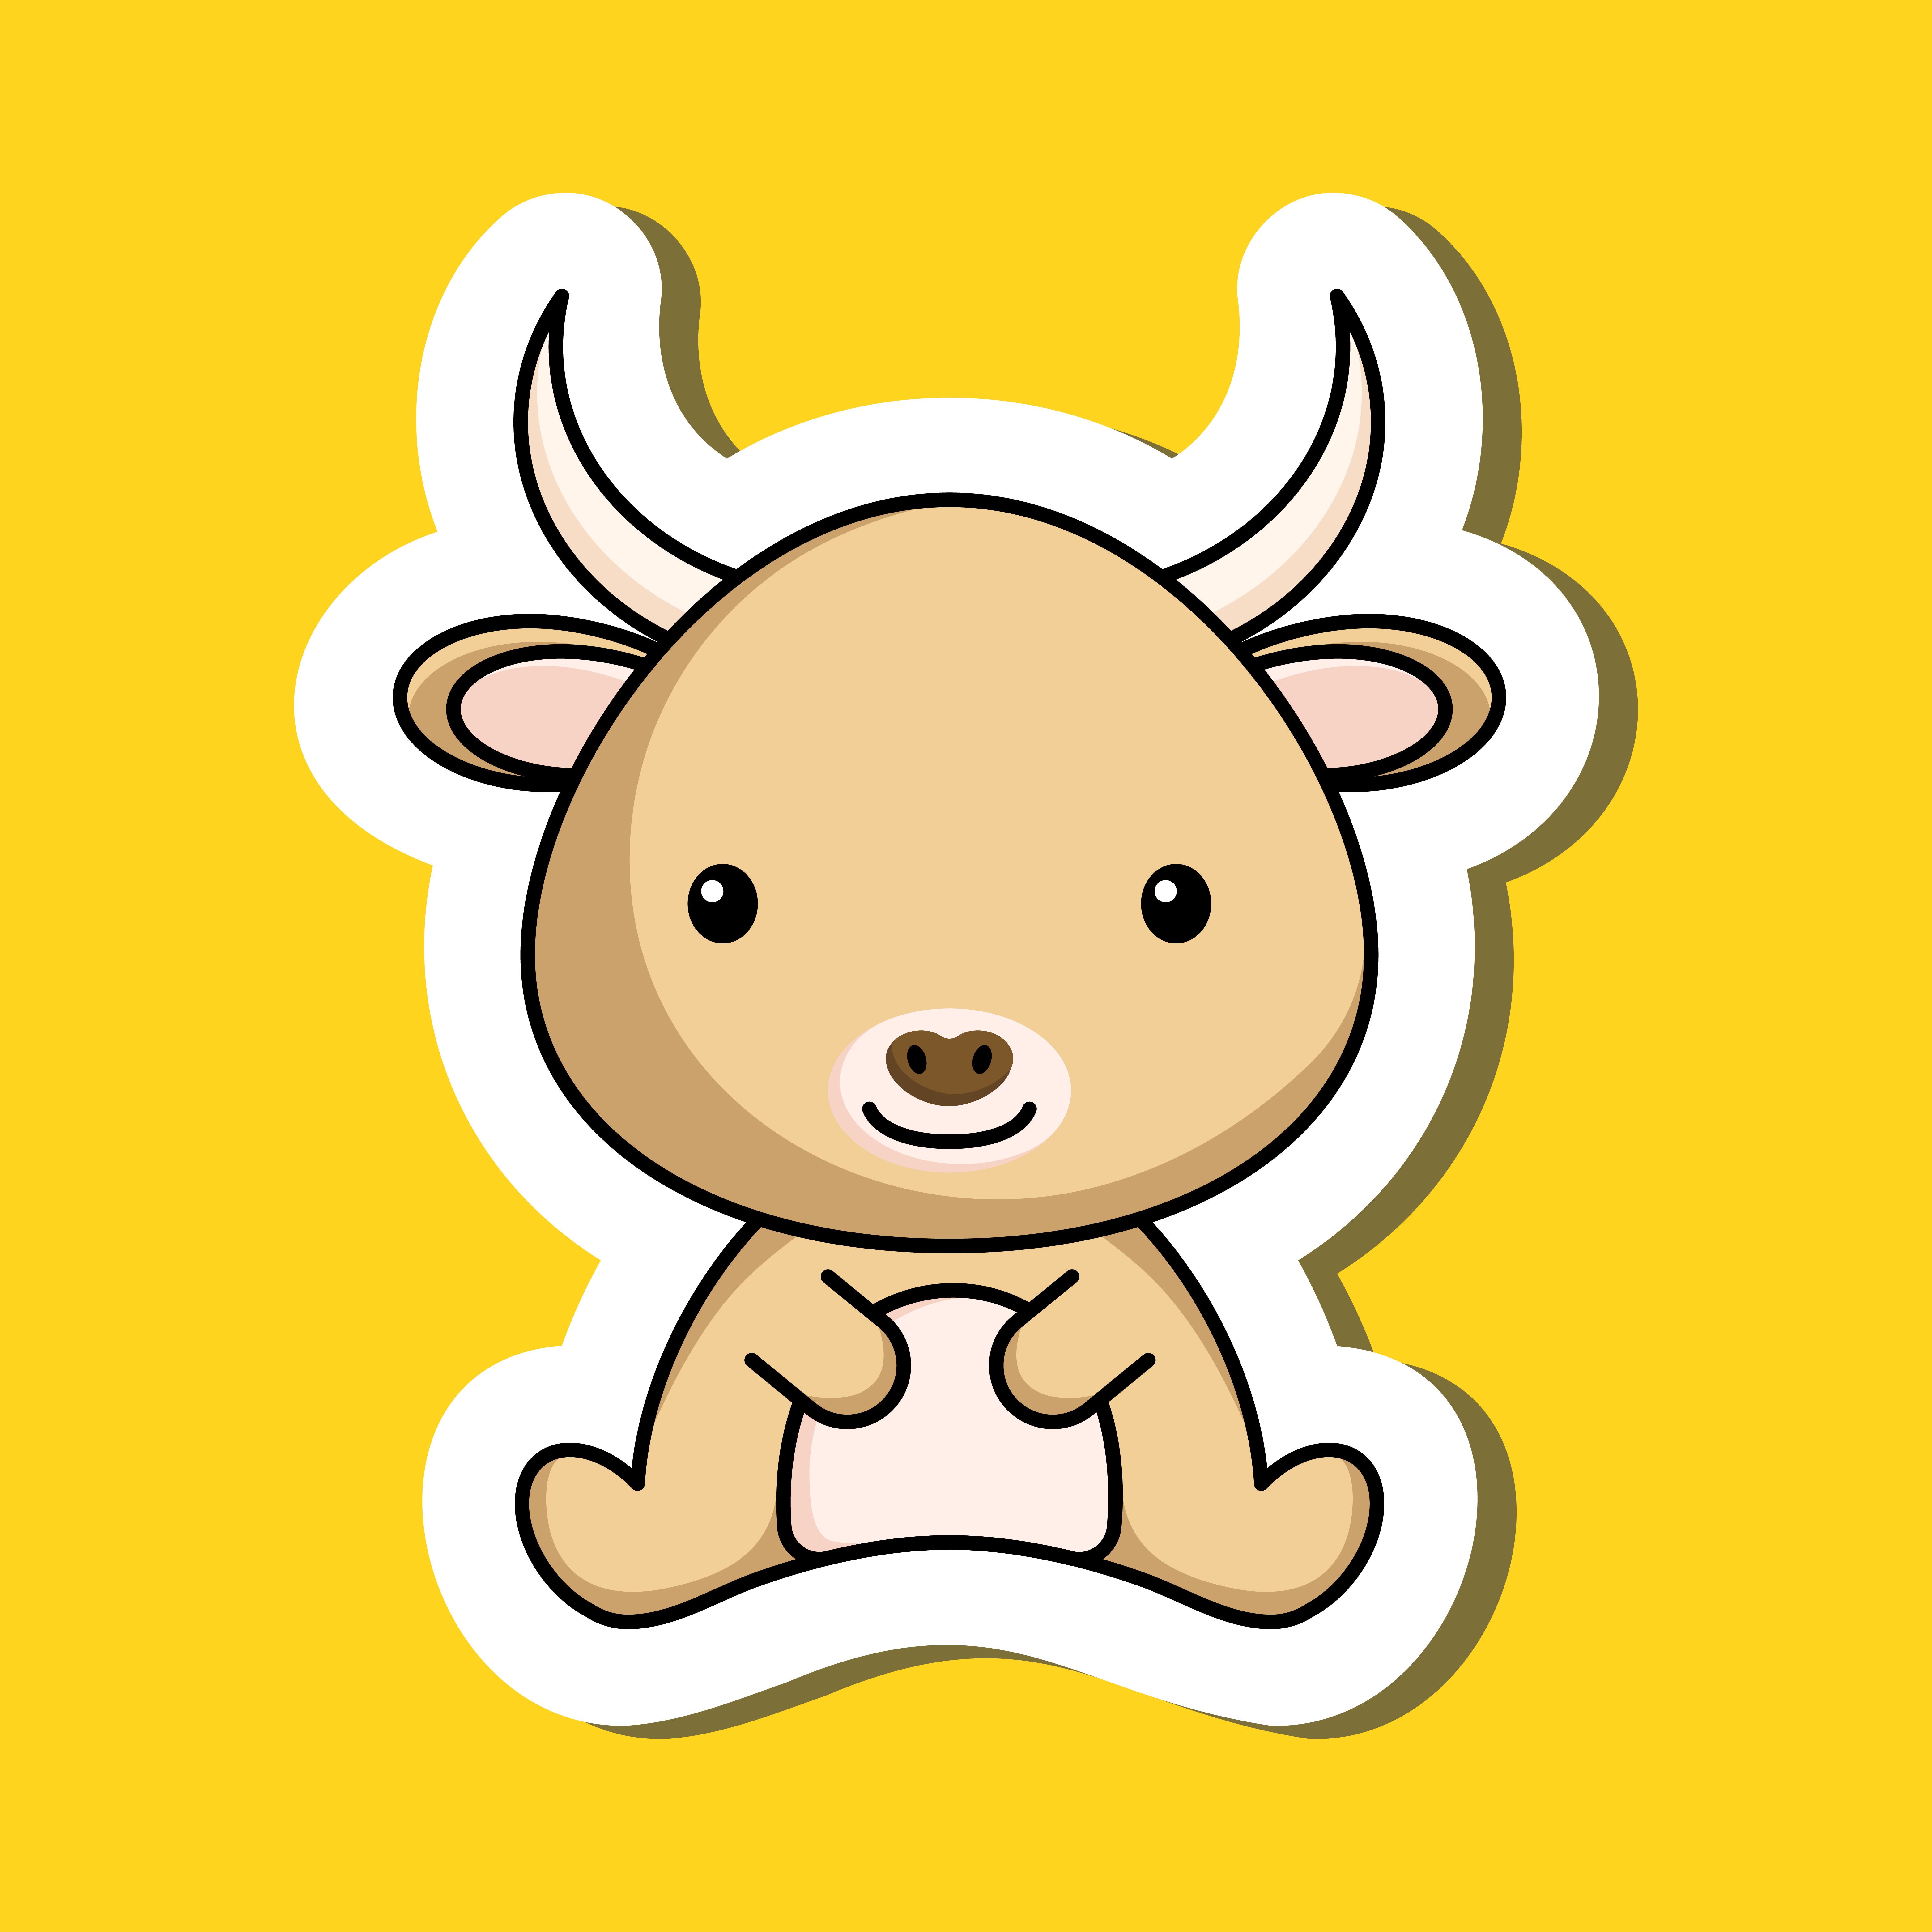 Cute cartoon sticker little yak logo template. Mascot animal character design of album, scrapbook, greeting card, invitation, flyer, sticker, card. Vector stock illustration.